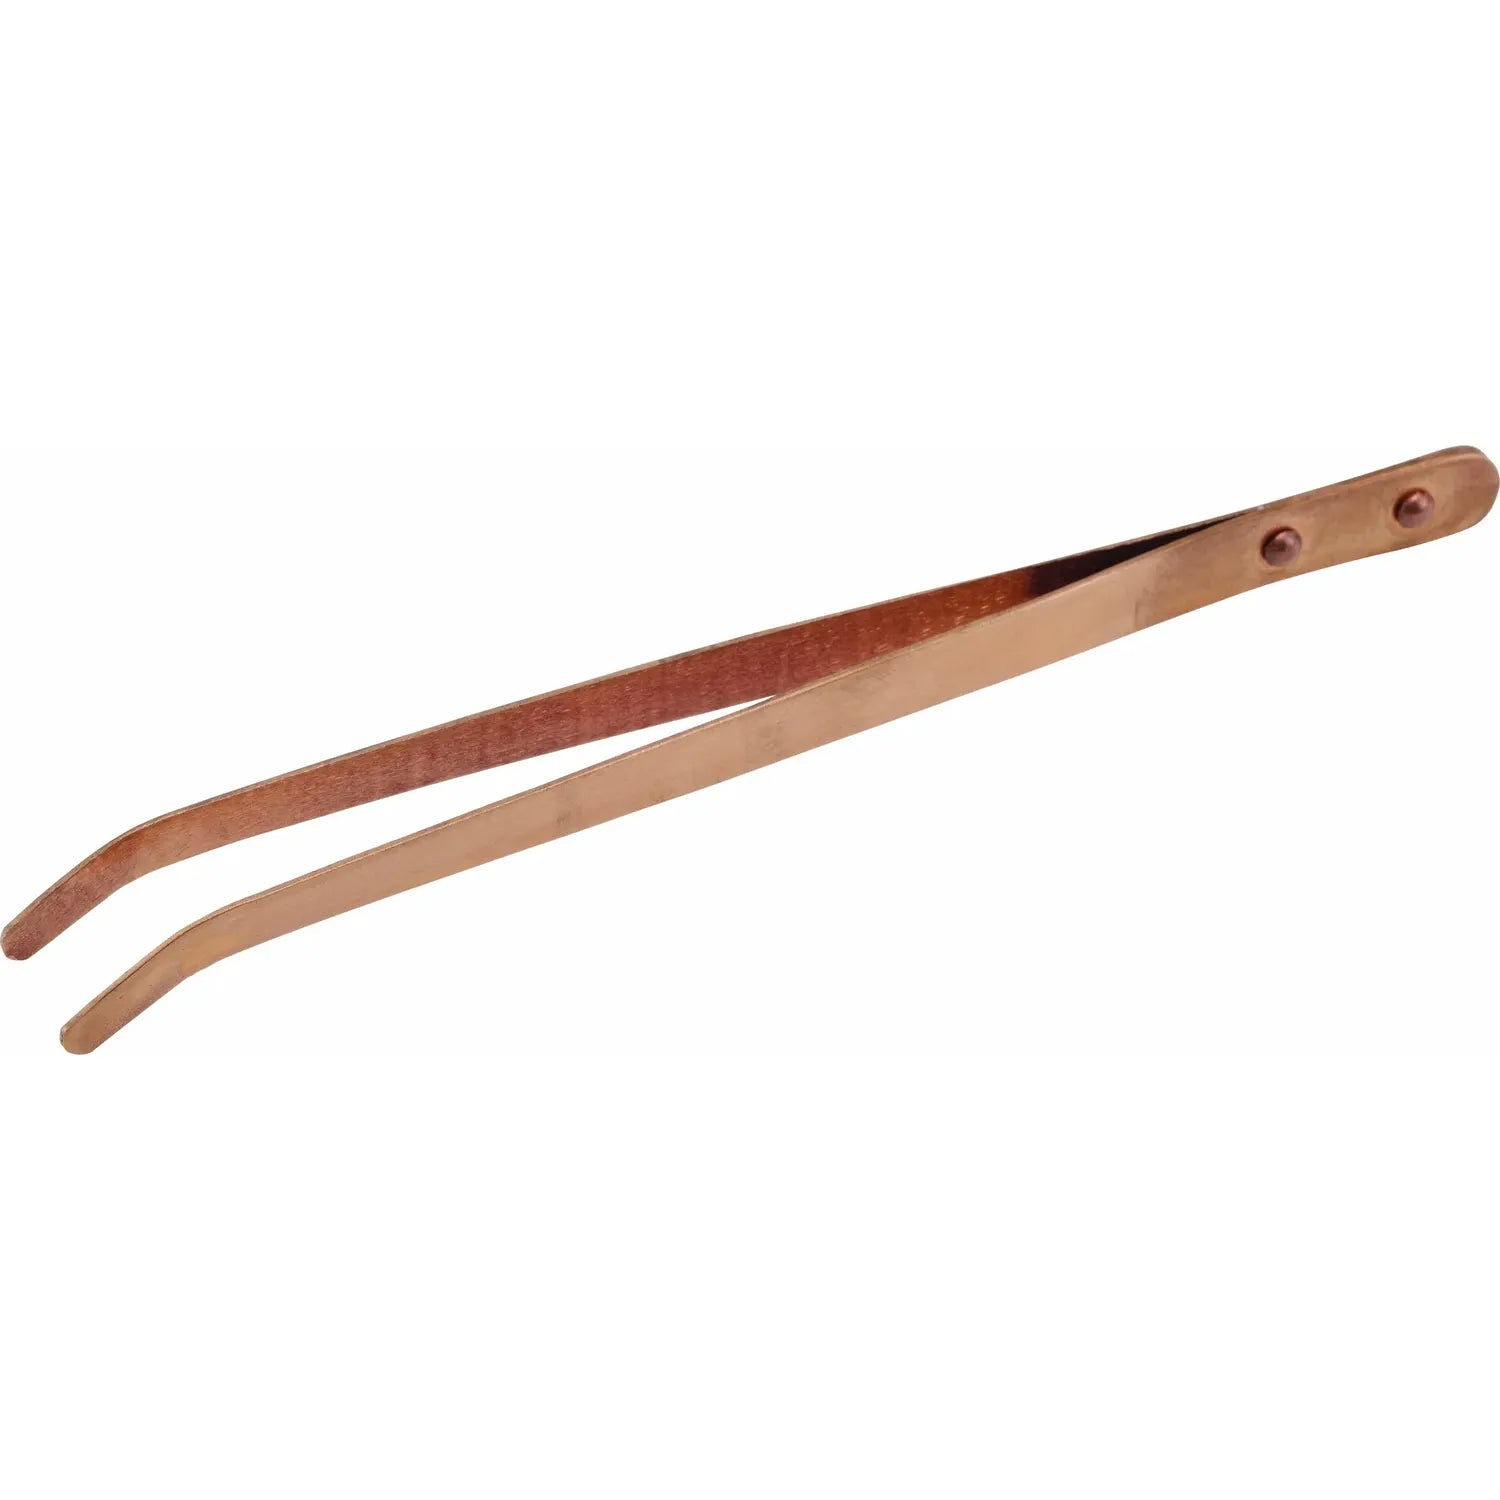 Tweezer Copper Tongs (curved) 21cm